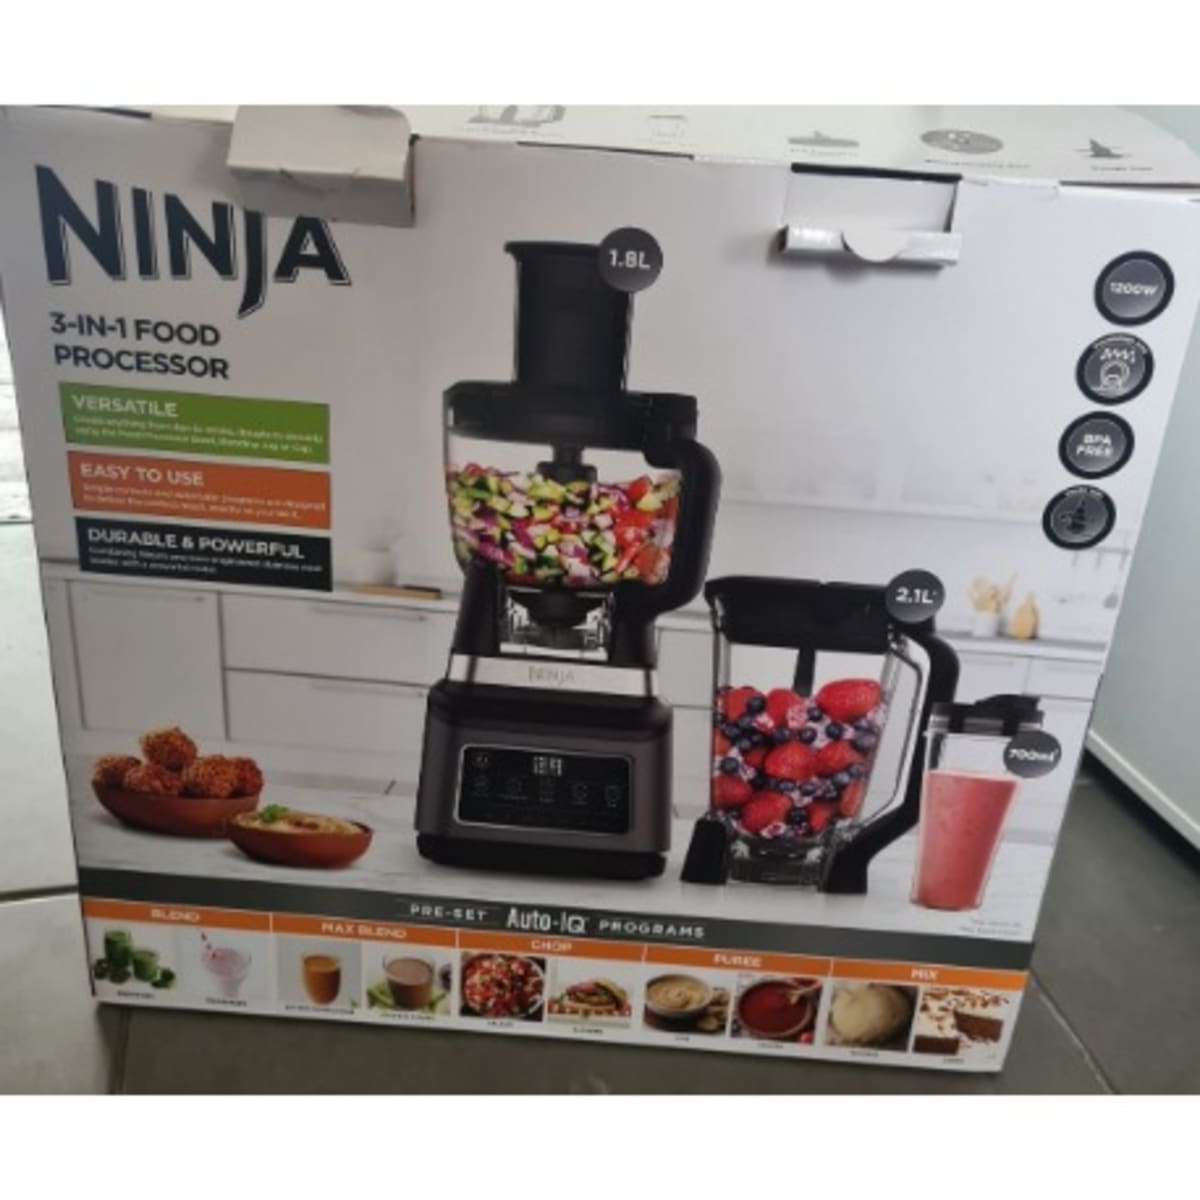 Ninja 3-in-1 Food Processor with Auto-IQ - BN800UK - Ninja UK